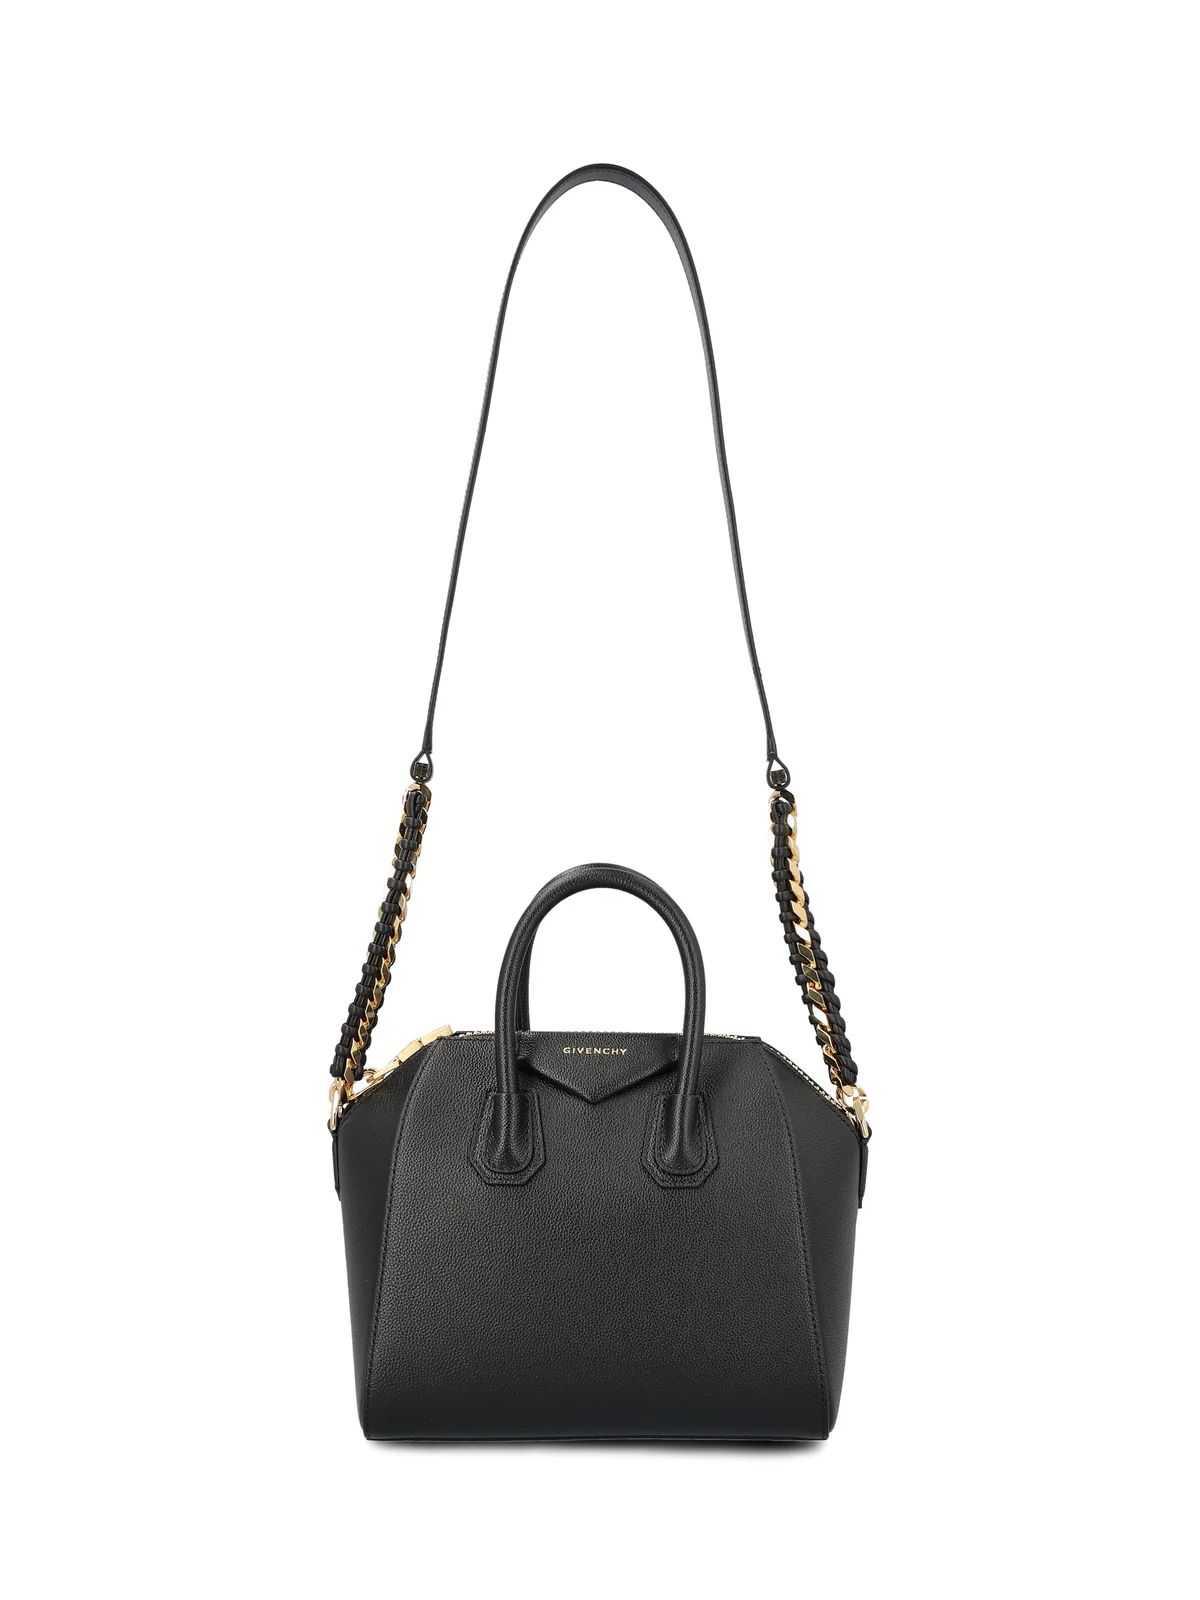 Givenchy Antigona bag | Cettire Global